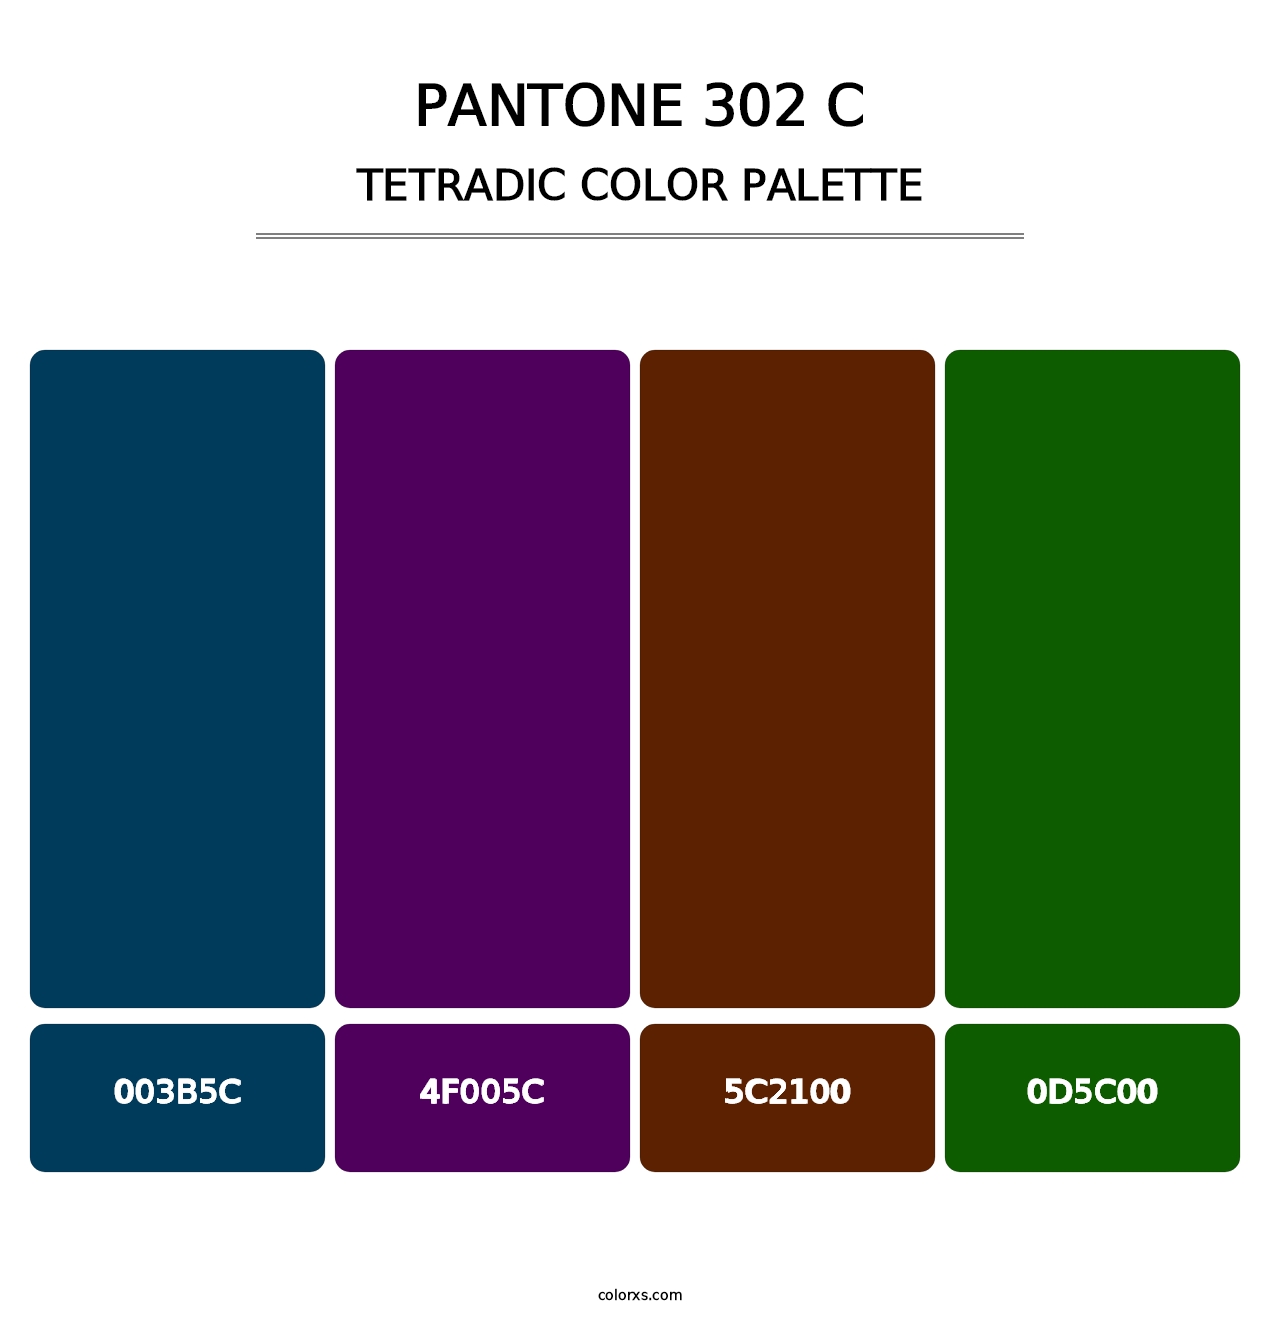 PANTONE 302 C - Tetradic Color Palette